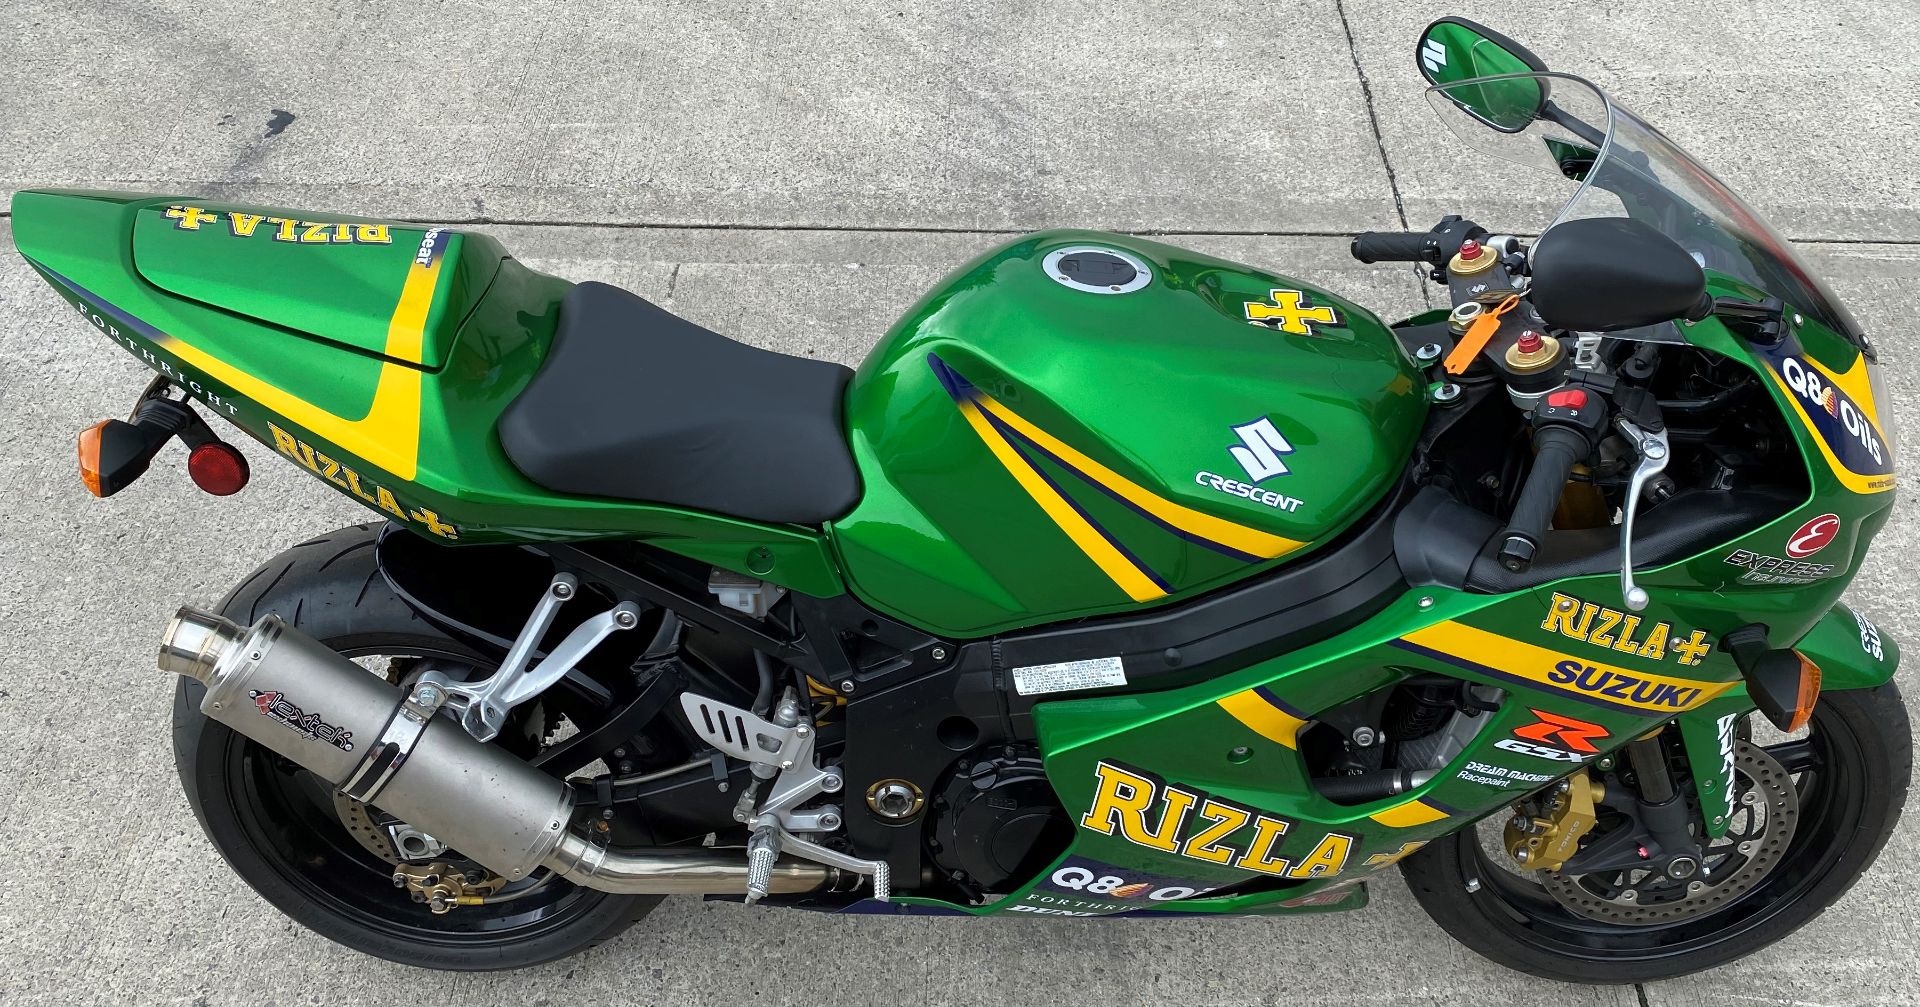 SUZUKI GSXR 1000 MOTORCYCLE - petrol - Rizla Green Reg No: DX05 ERK Rec. Mil: 25 miles 1st Reg: 01. - Image 2 of 18